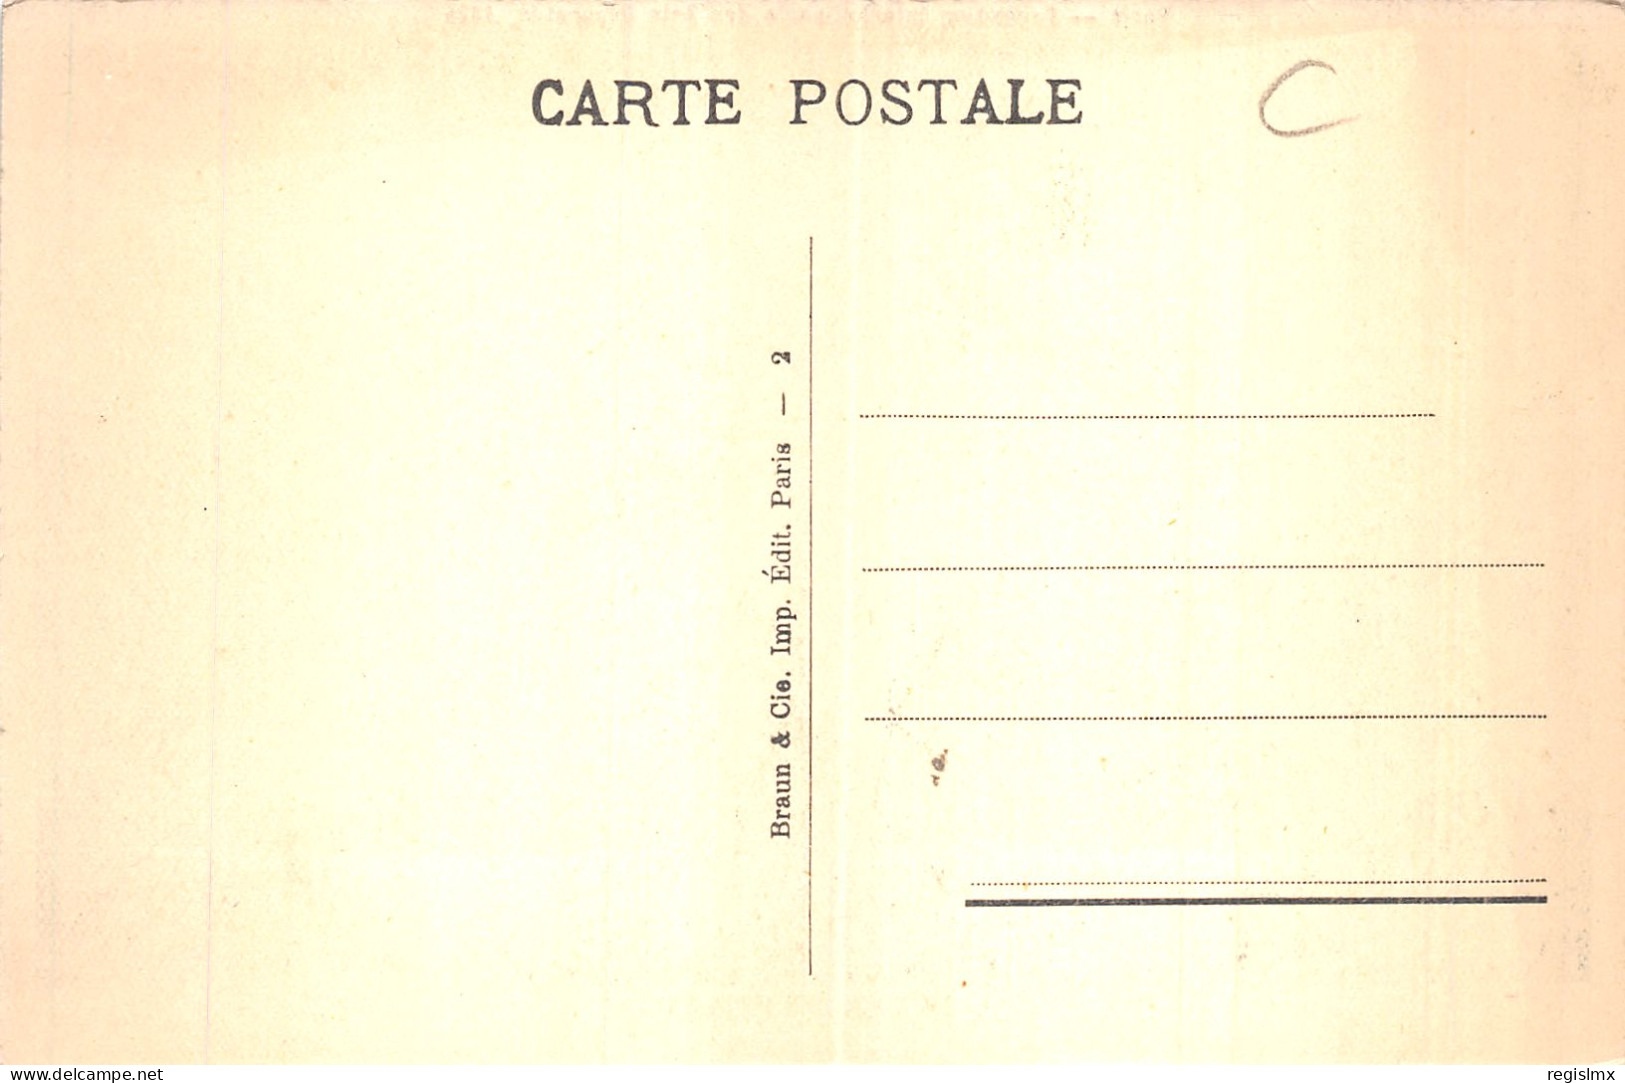 75-PARIS EXPOSITION INTERNATIONALE DES ARTS DECORATIFS 1925-N°T1041-H/0101 - Ausstellungen